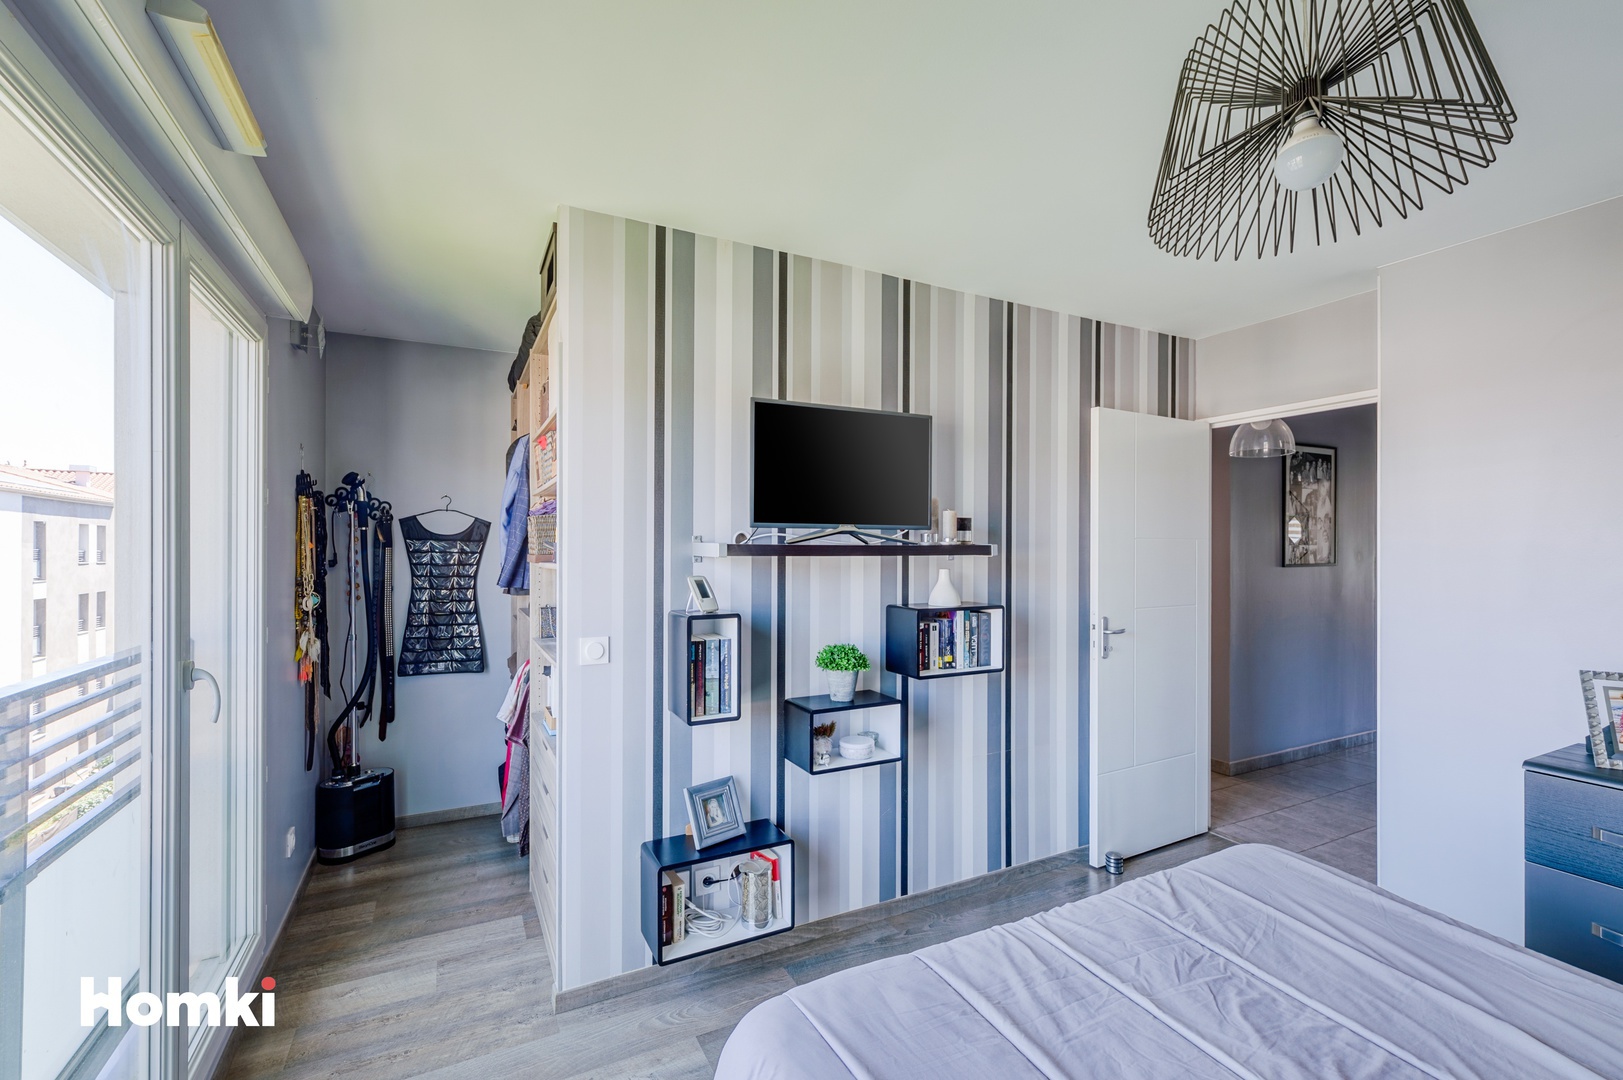 Homki - Vente Appartement  de 91.0 m² à Meyzieu 69330